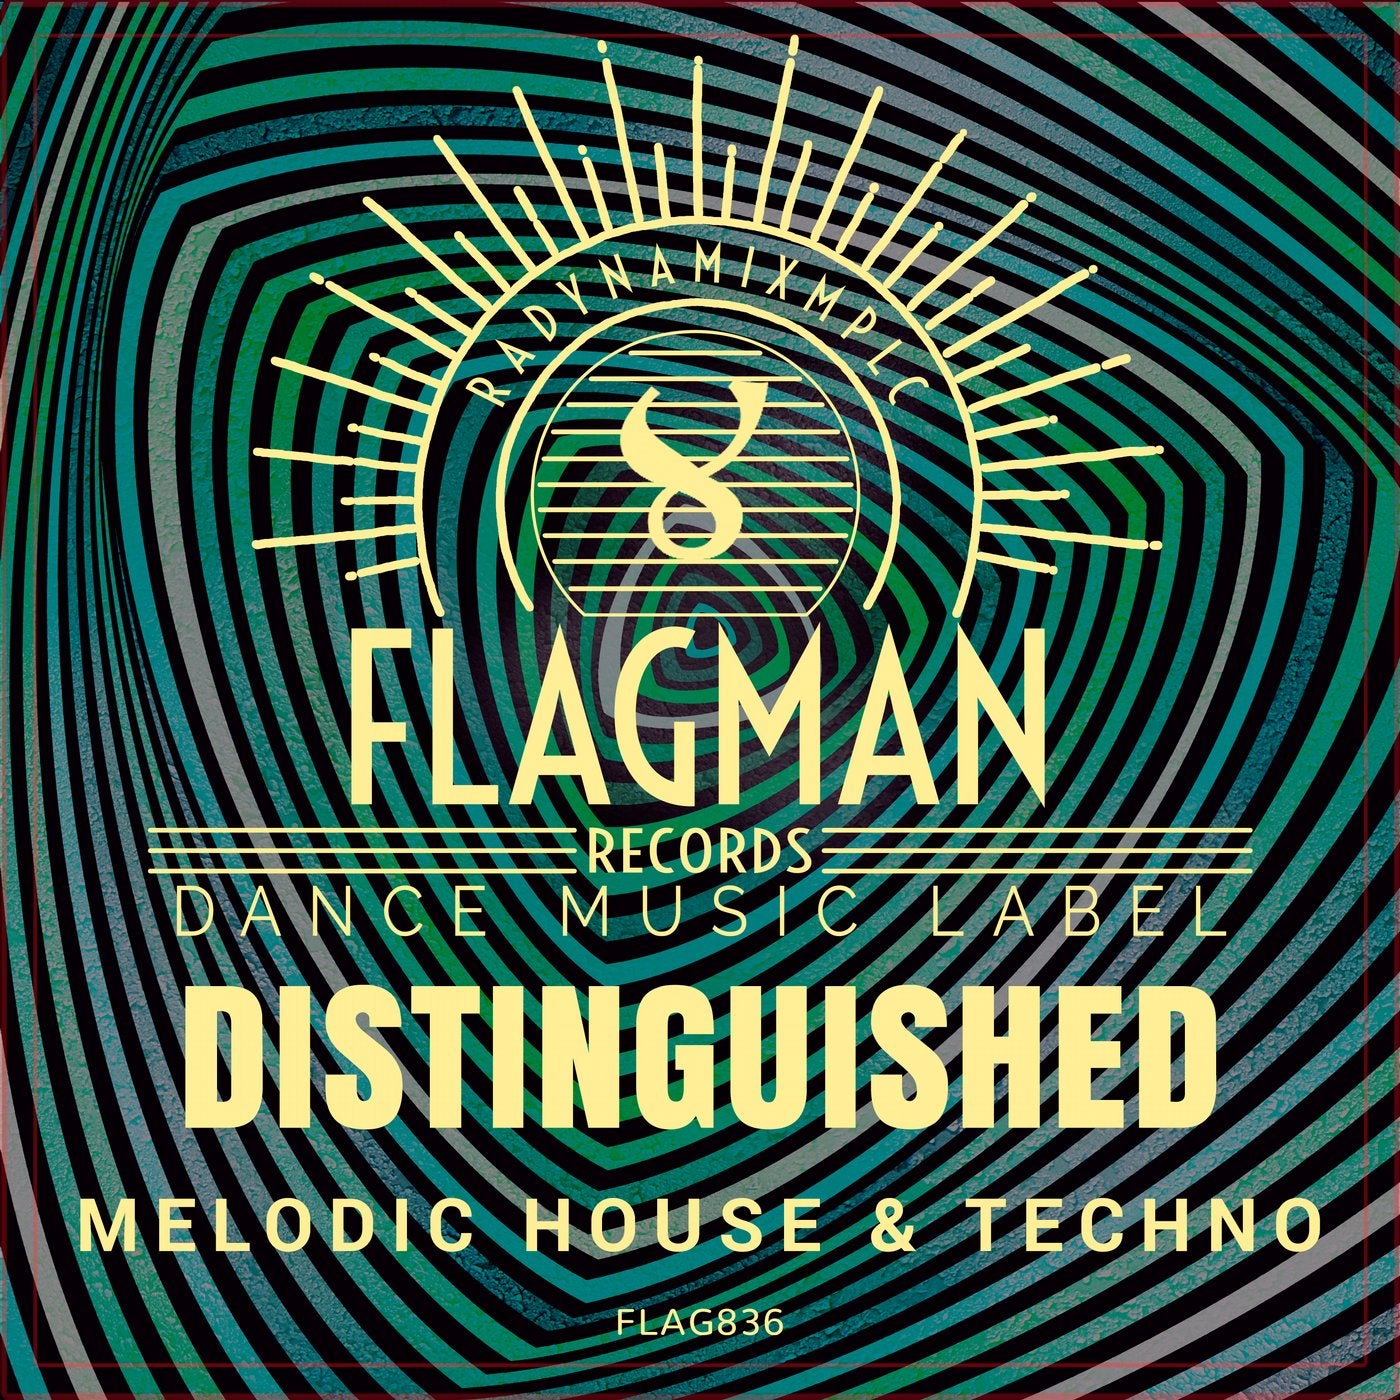 Distingueshed Melodic House & Techno